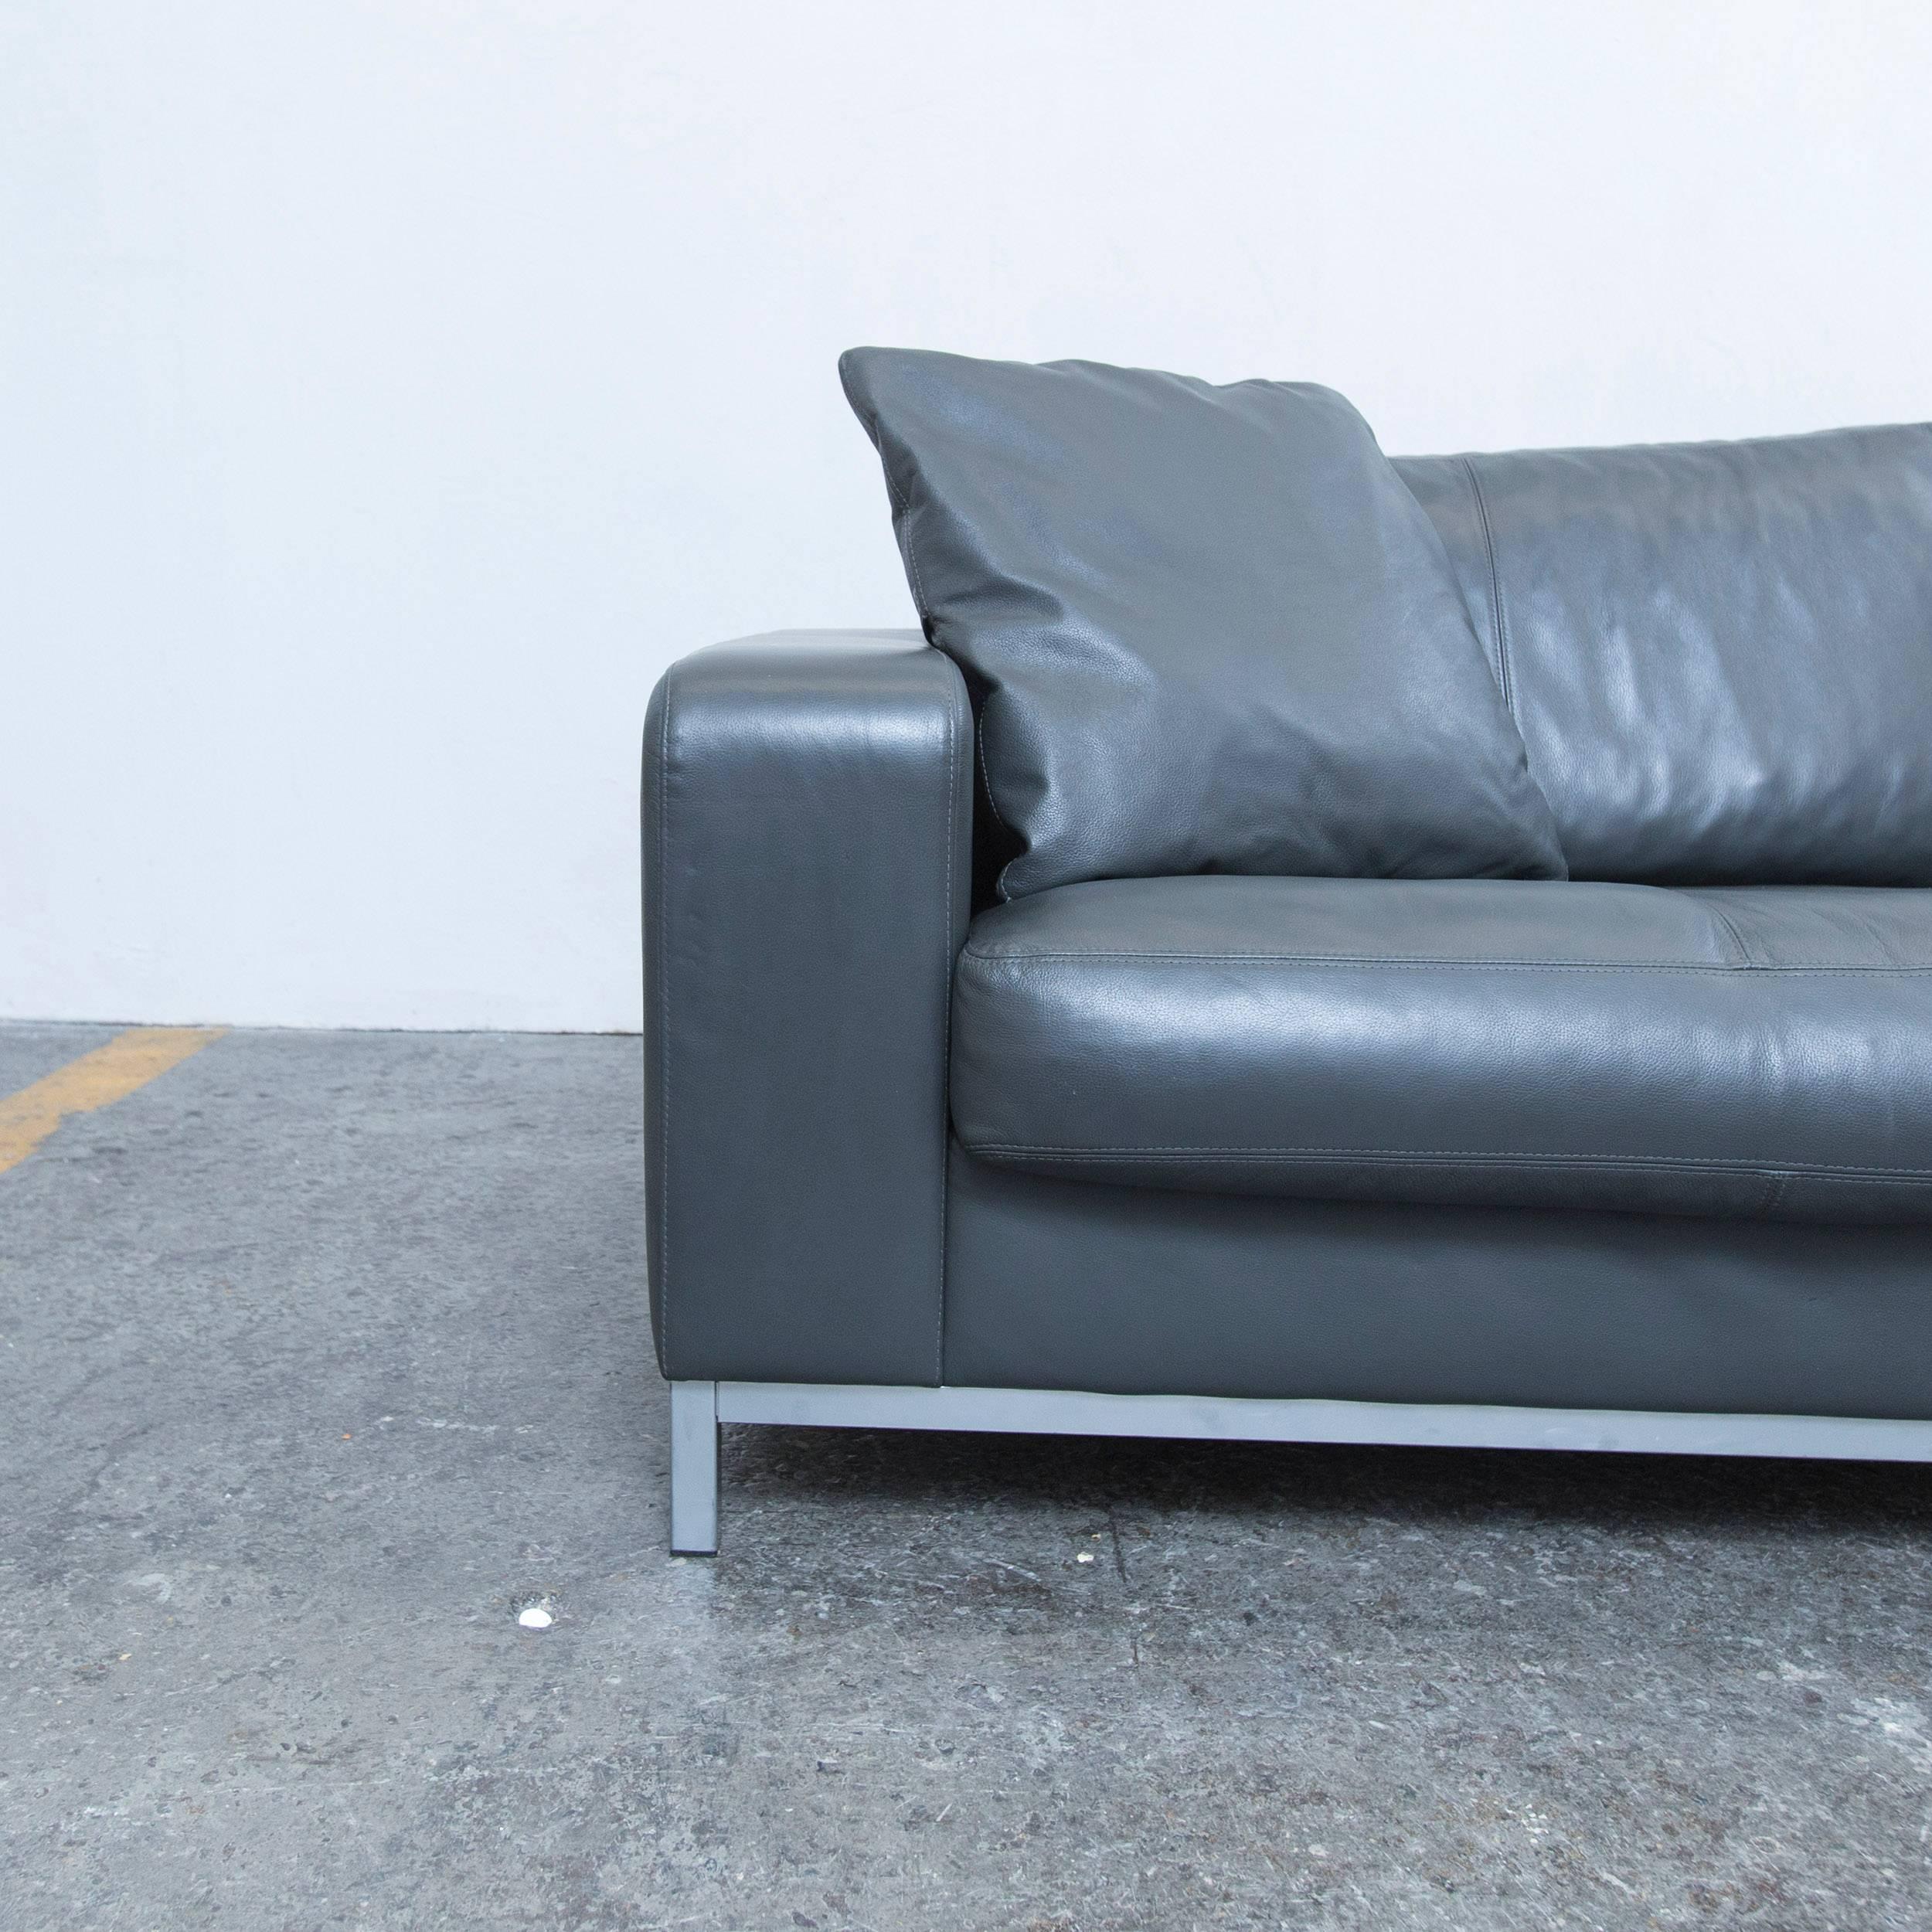 Grey colored original Machalke designer leather sofa in a modern and minimalistic design, made for pure comfort.